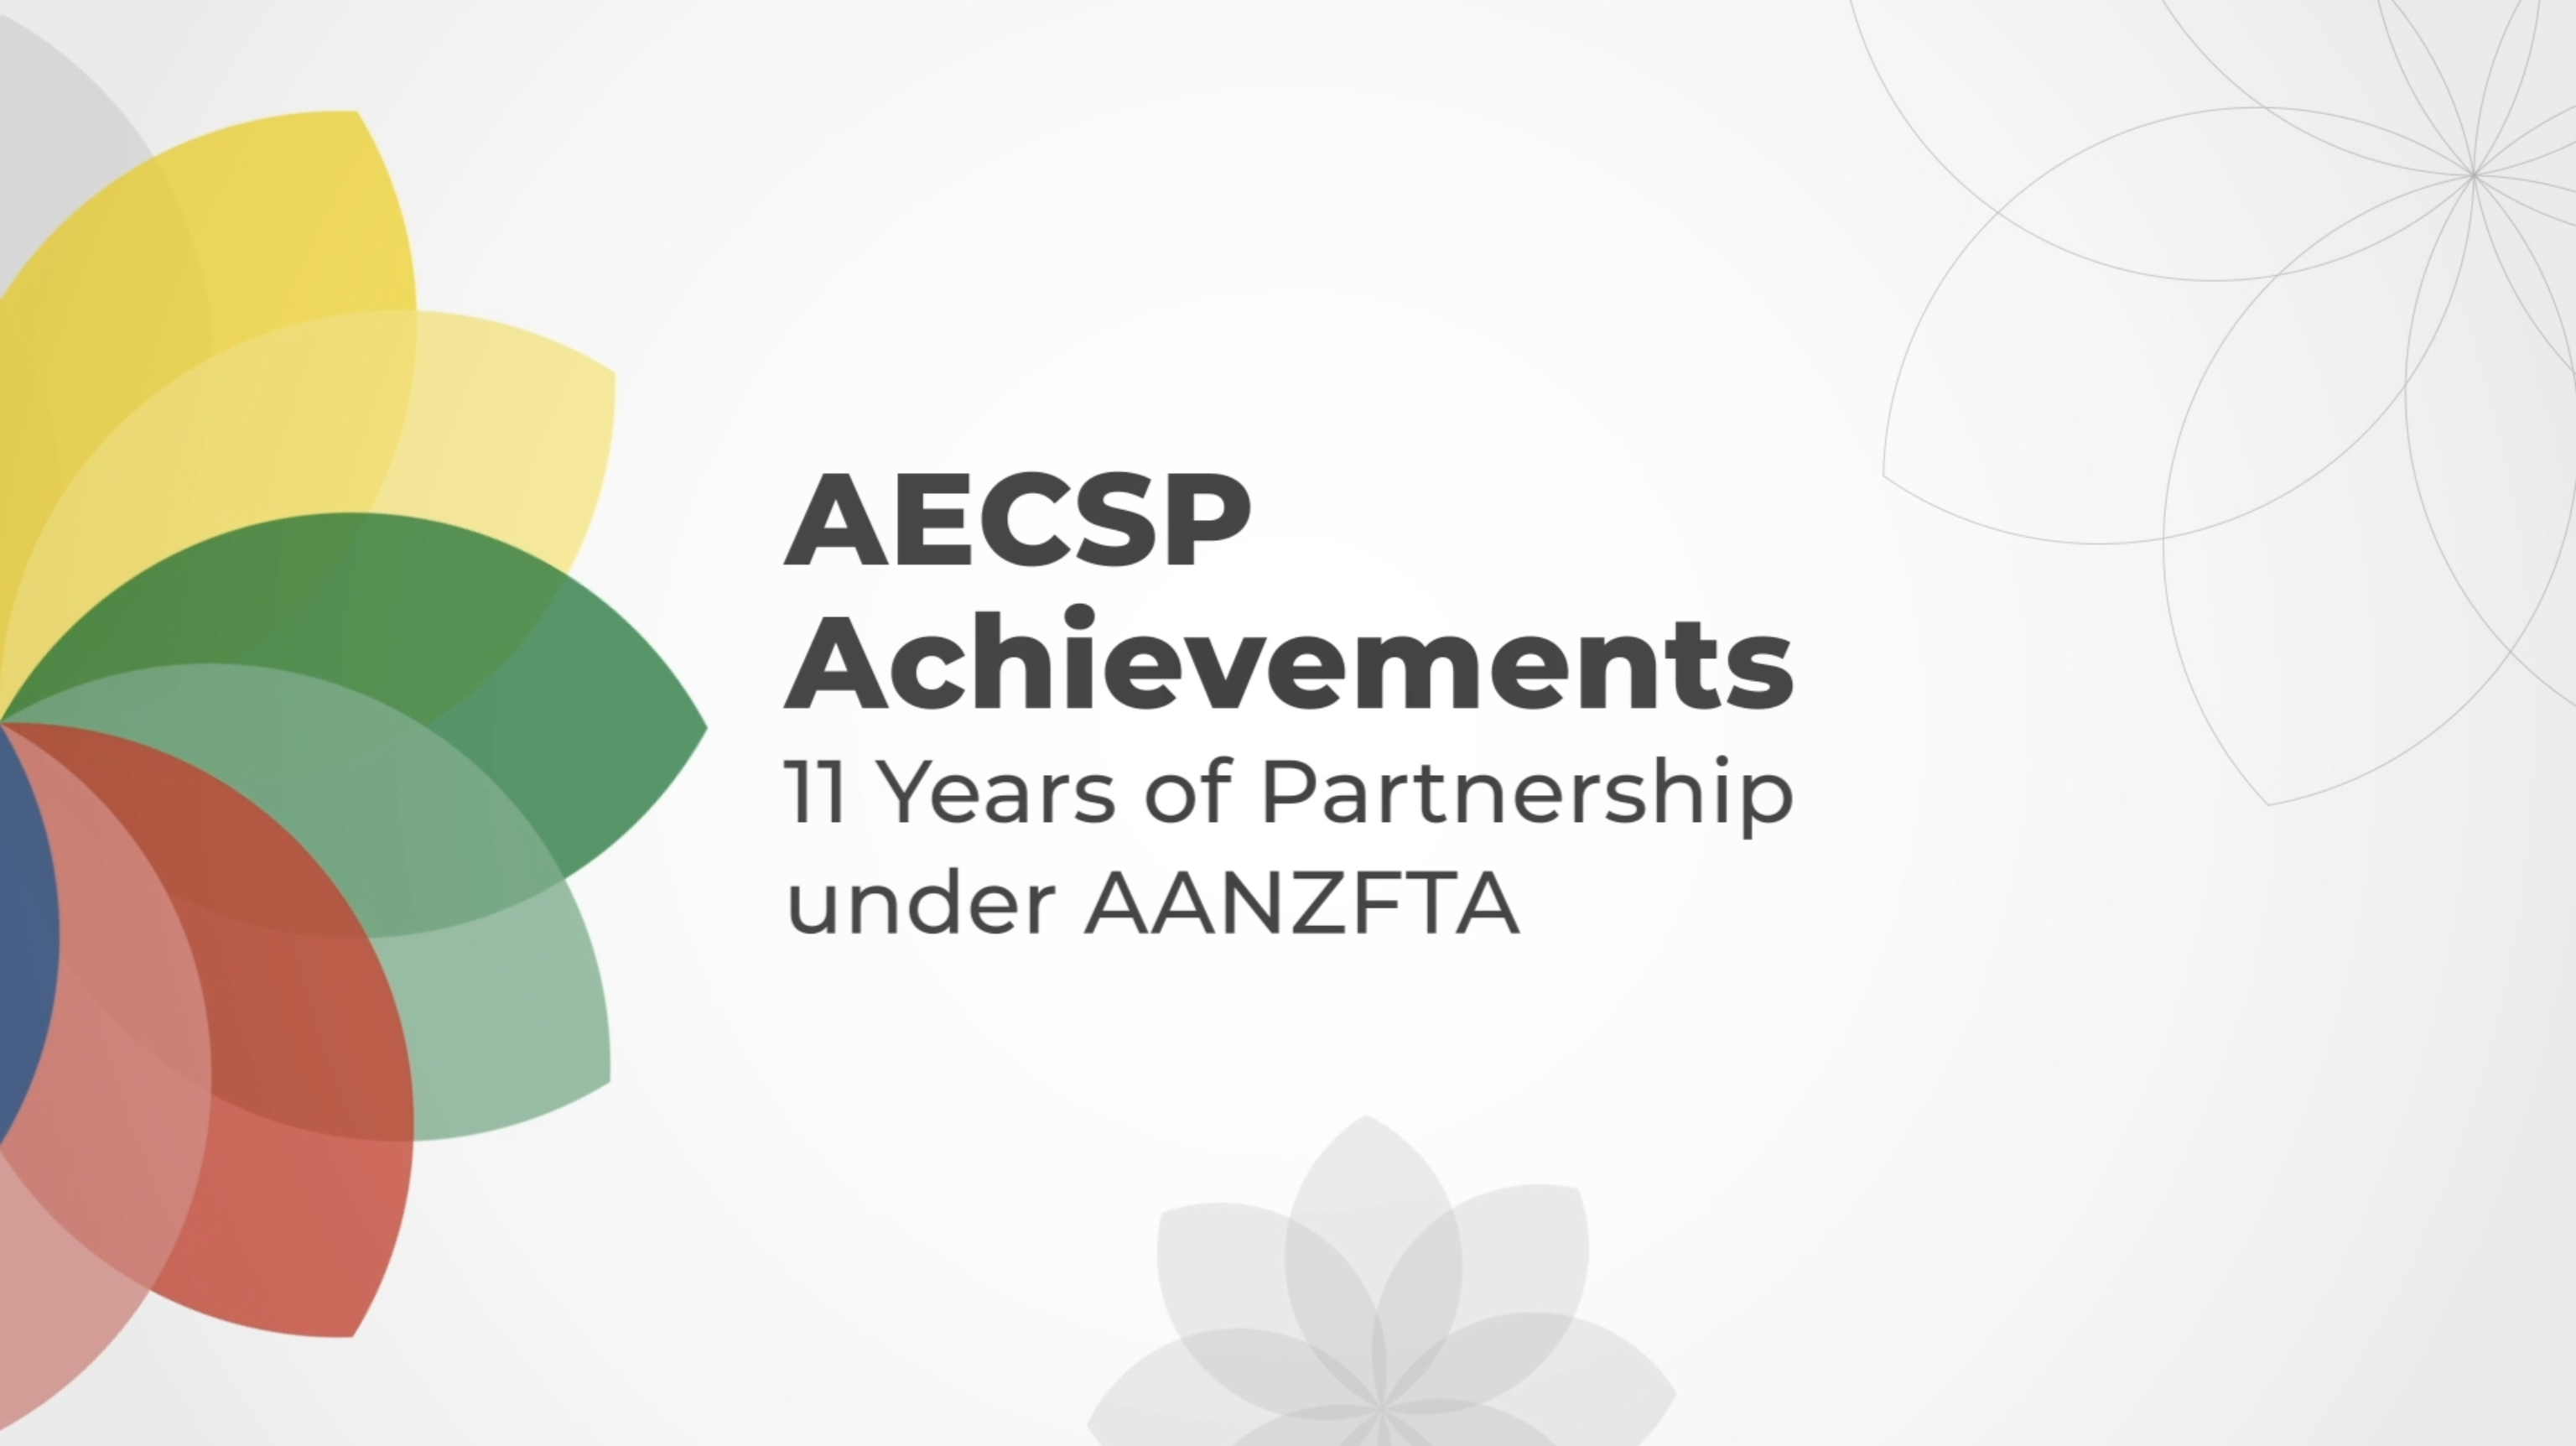 AECSP Infographic Video on 'AECSP Achievements: 11 Years of Partnership under AANZFTA'